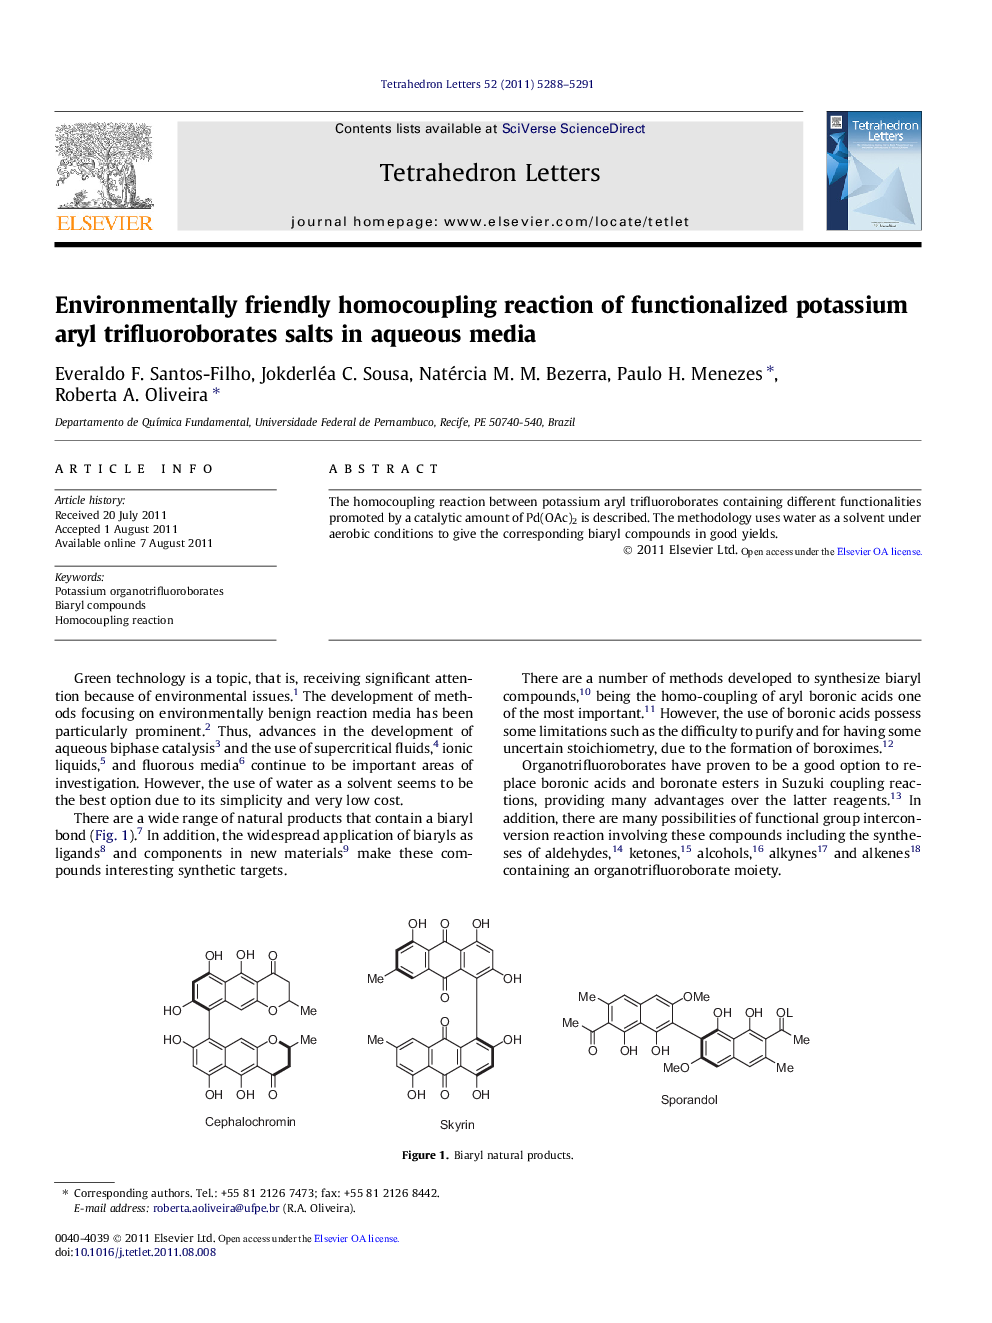 Environmentally friendly homocoupling reaction of functionalized potassium aryl trifluoroborates salts in aqueous media